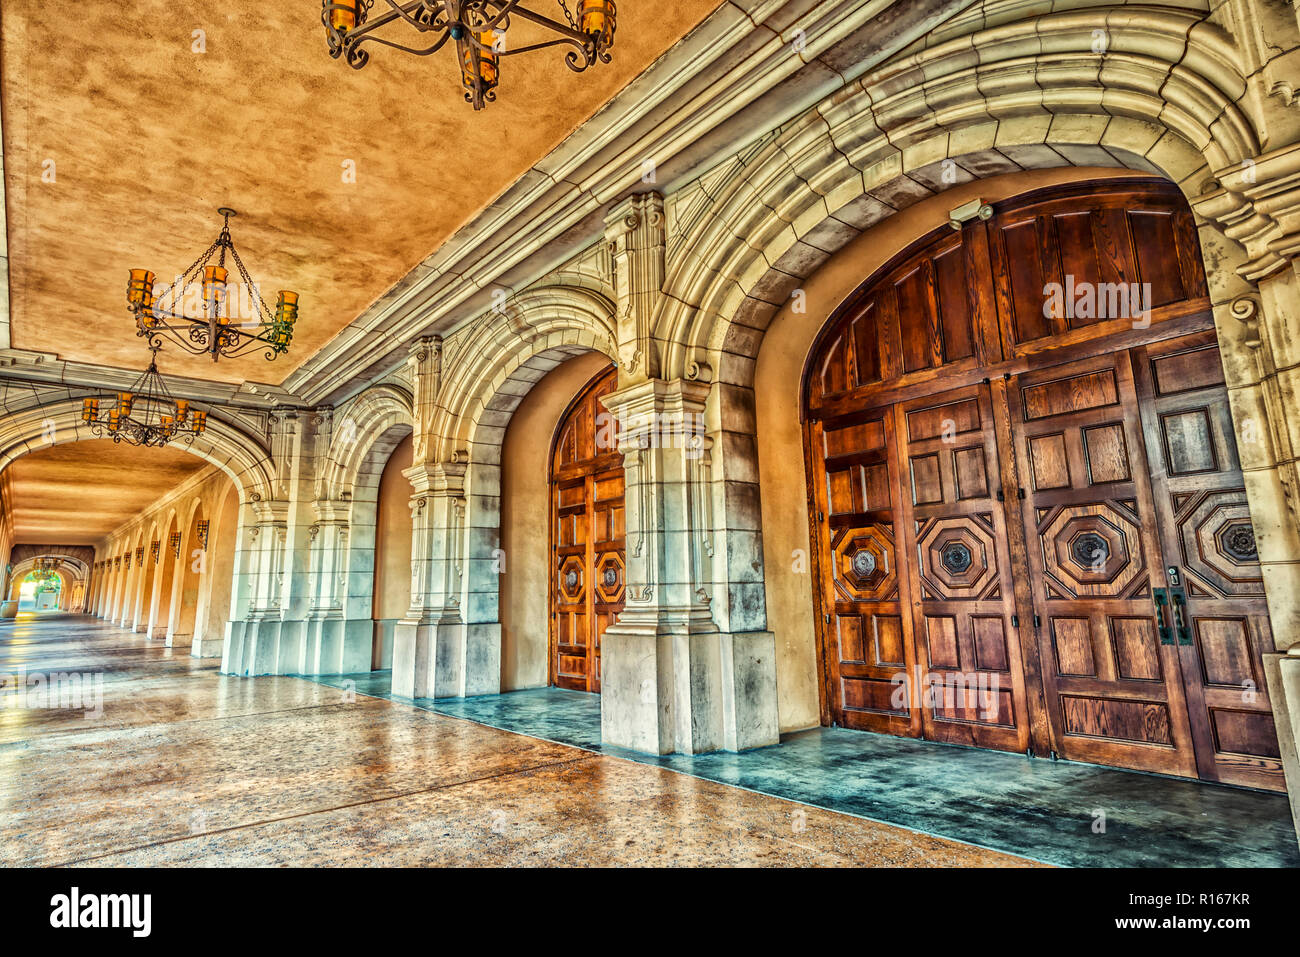 San Diego, California, USA. Ornate architecture at Balboa Park. Stock Photo